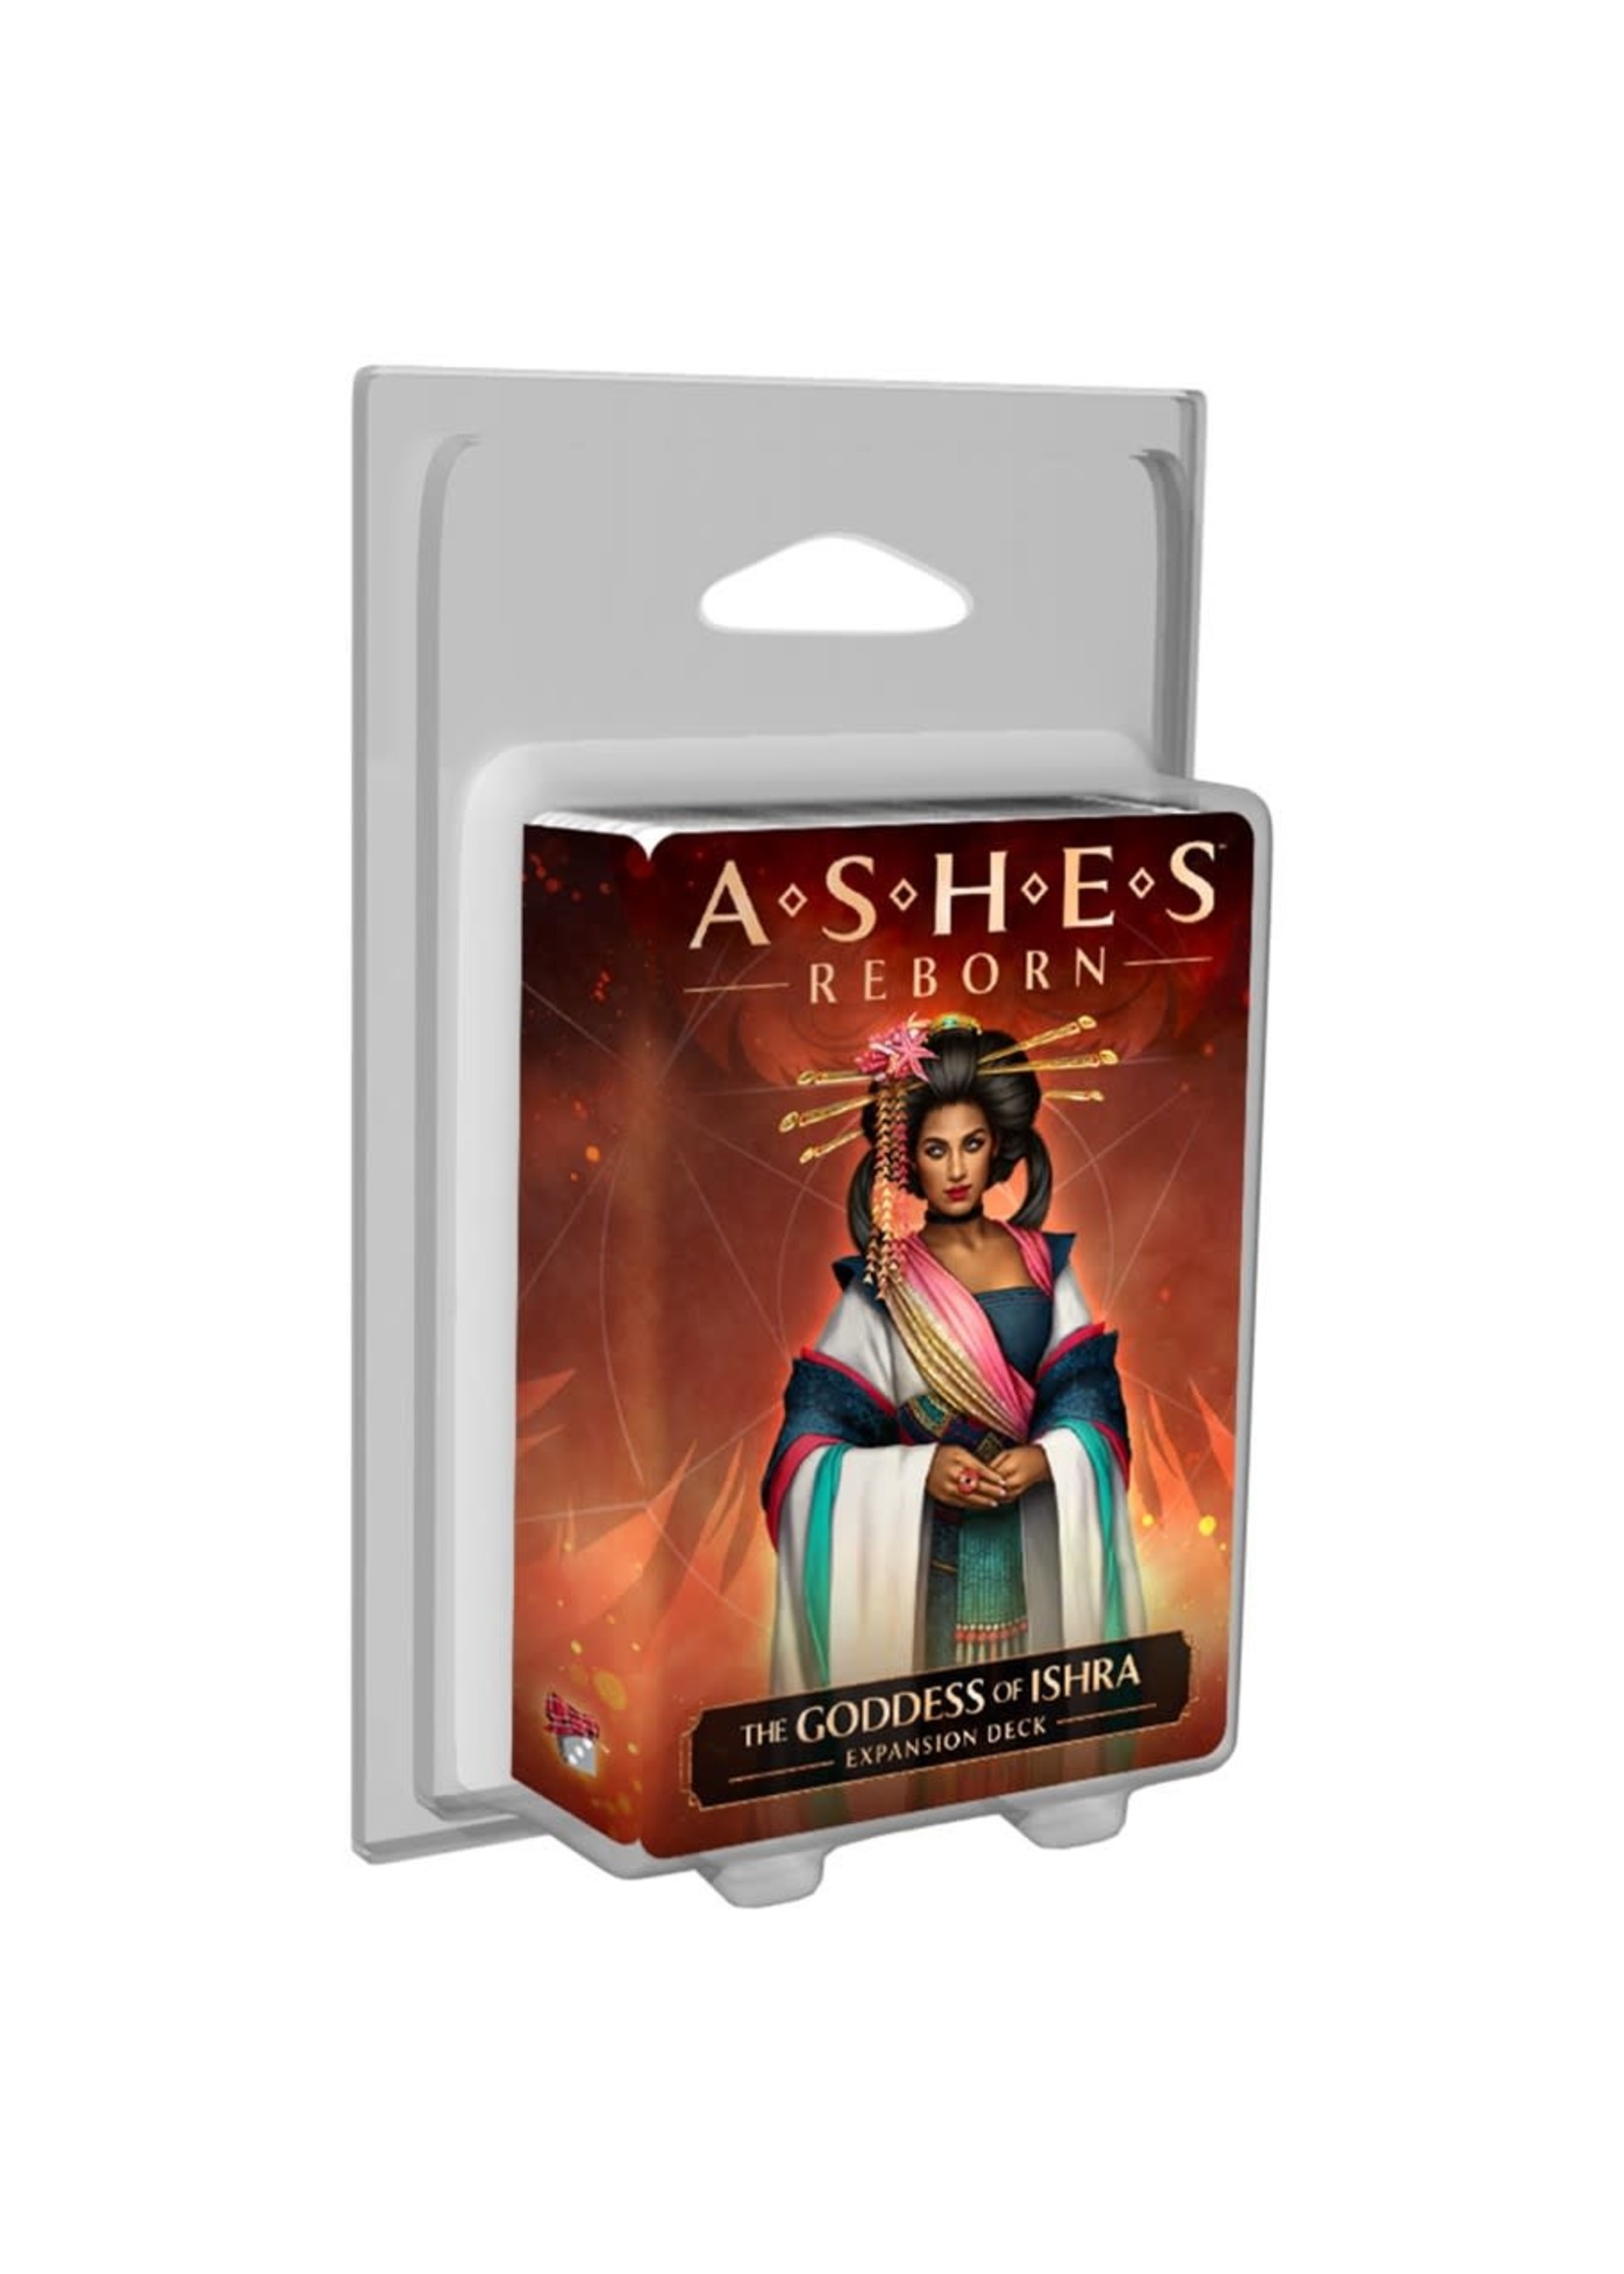 Plaid Hat Games Ashes Reborn: The Goddess of Ishra Expansion Deck